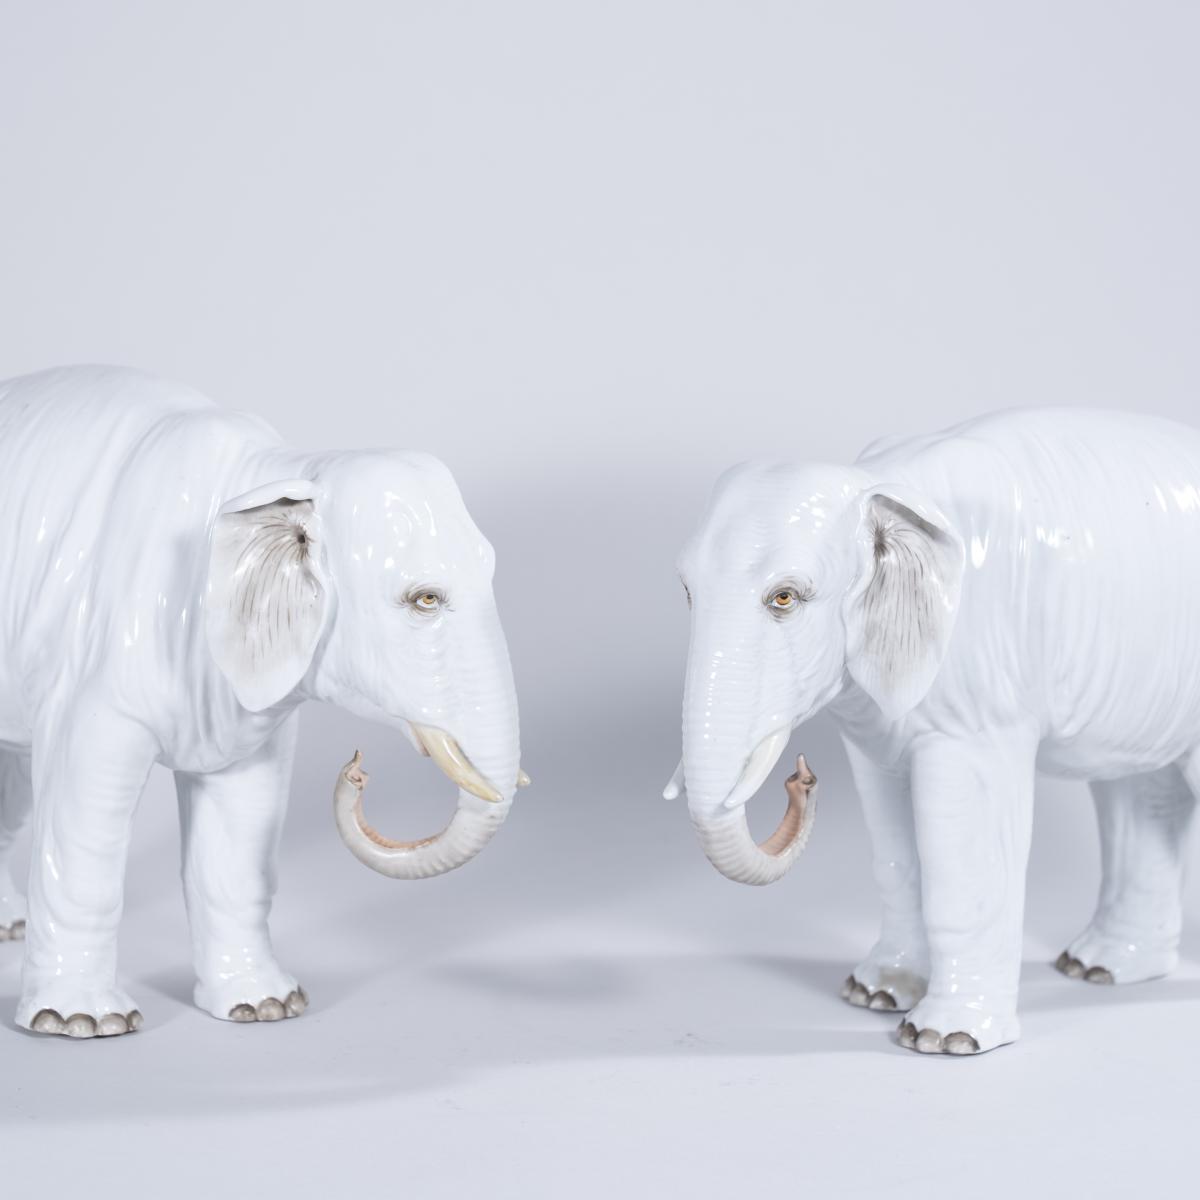 A Large Pair of White Porcelain Elephants, Samson, Circa 1900